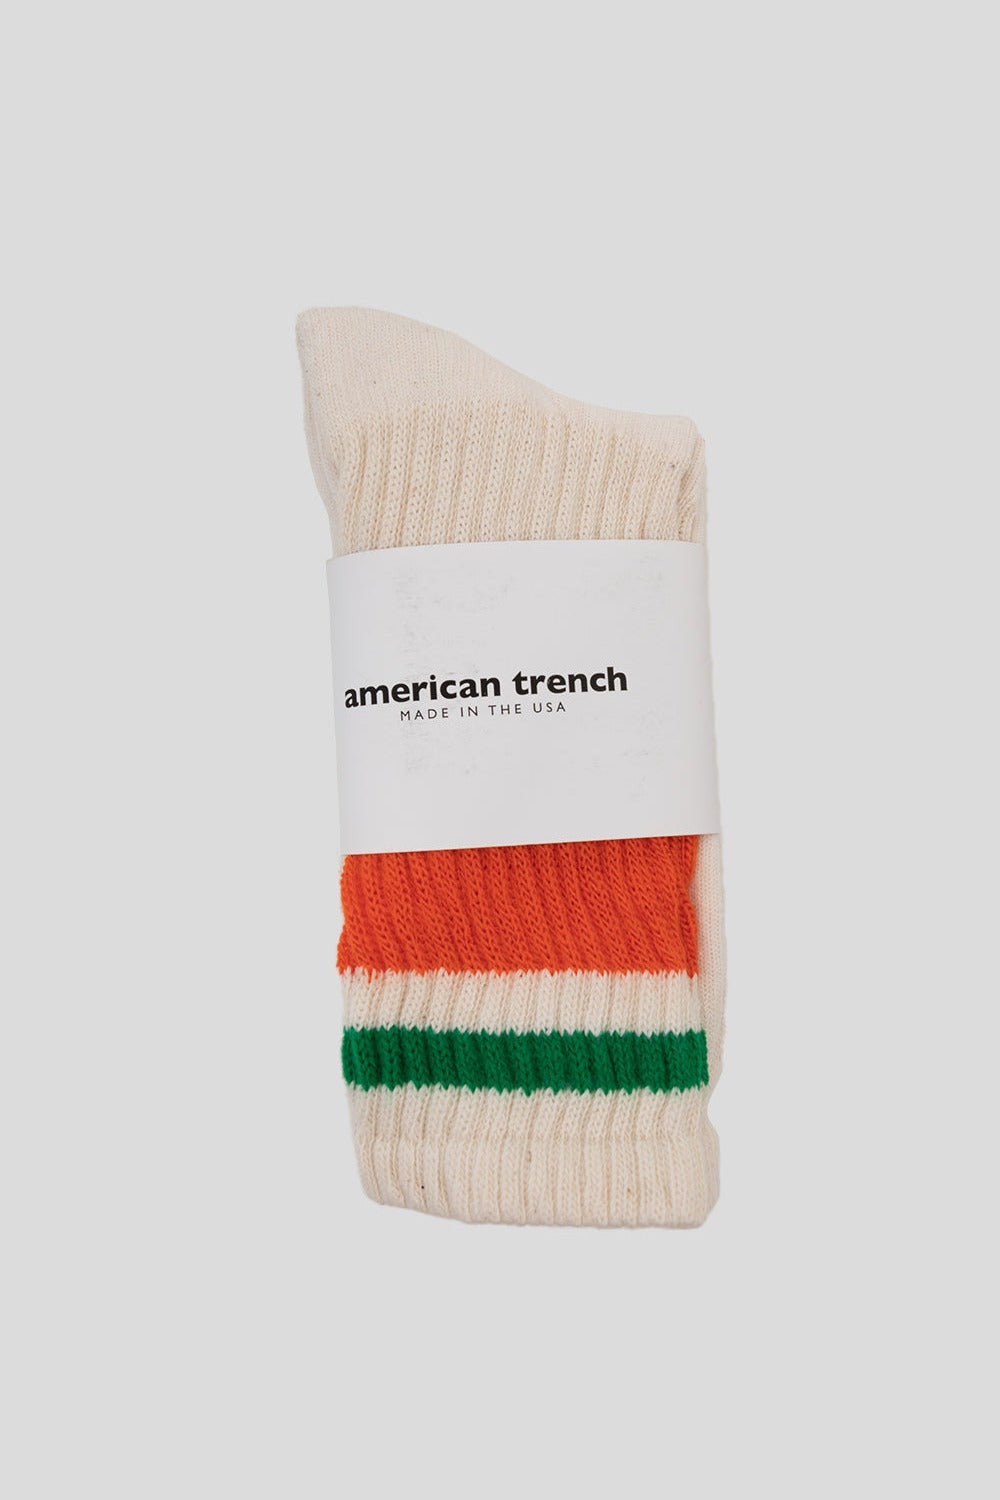 american-trench-retro-stripe-orange-kelly